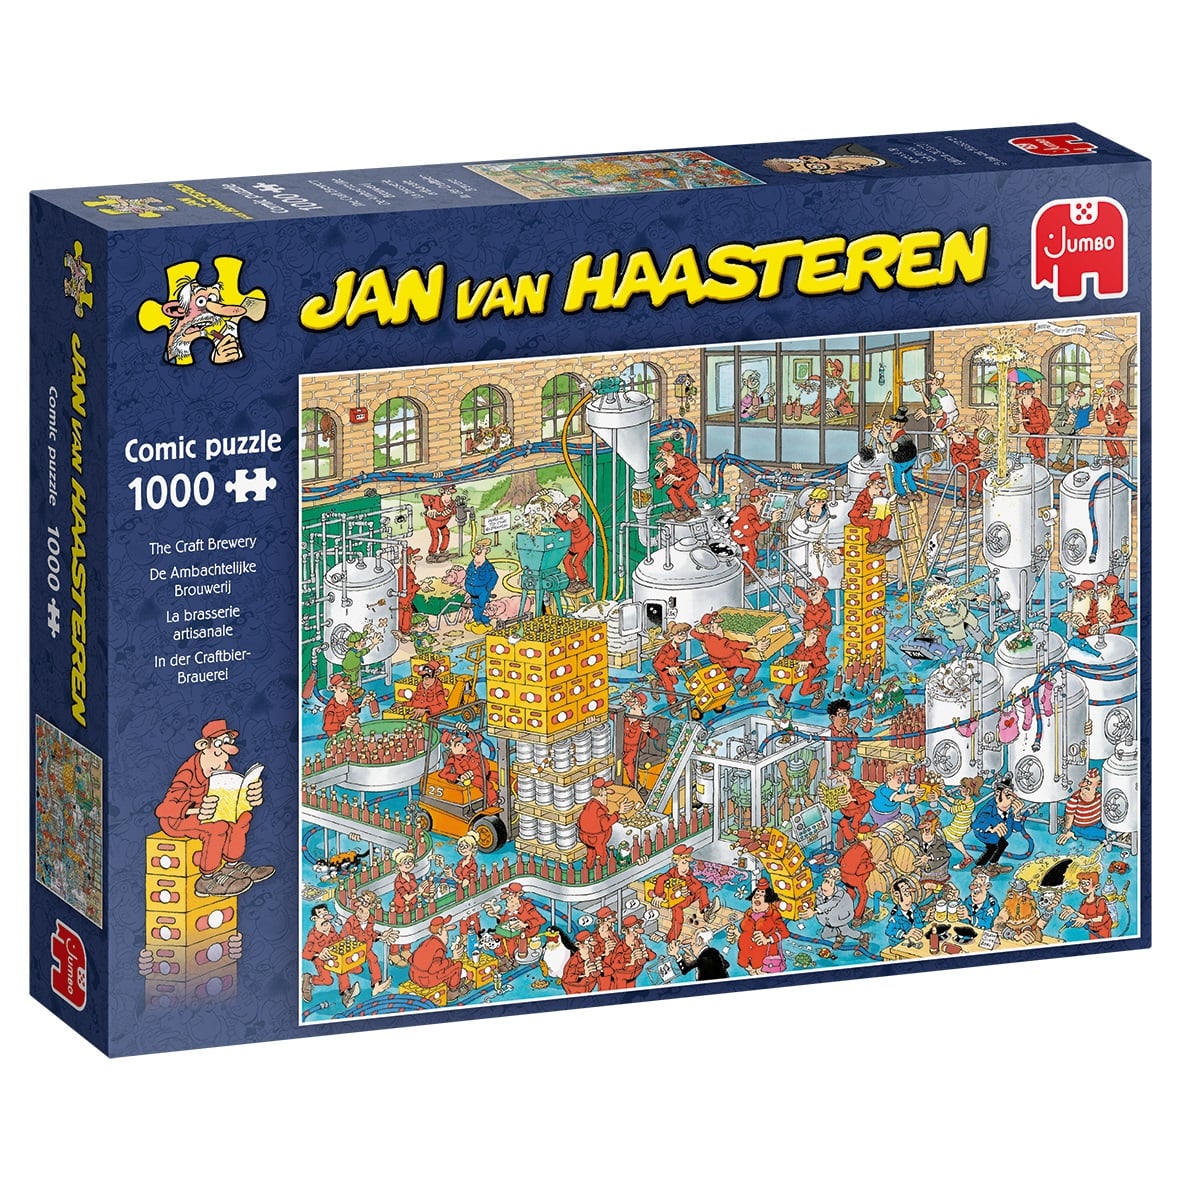 In der Craftbier-Brauerei | Jan van Haasteren | Puzzle 1000 Teile